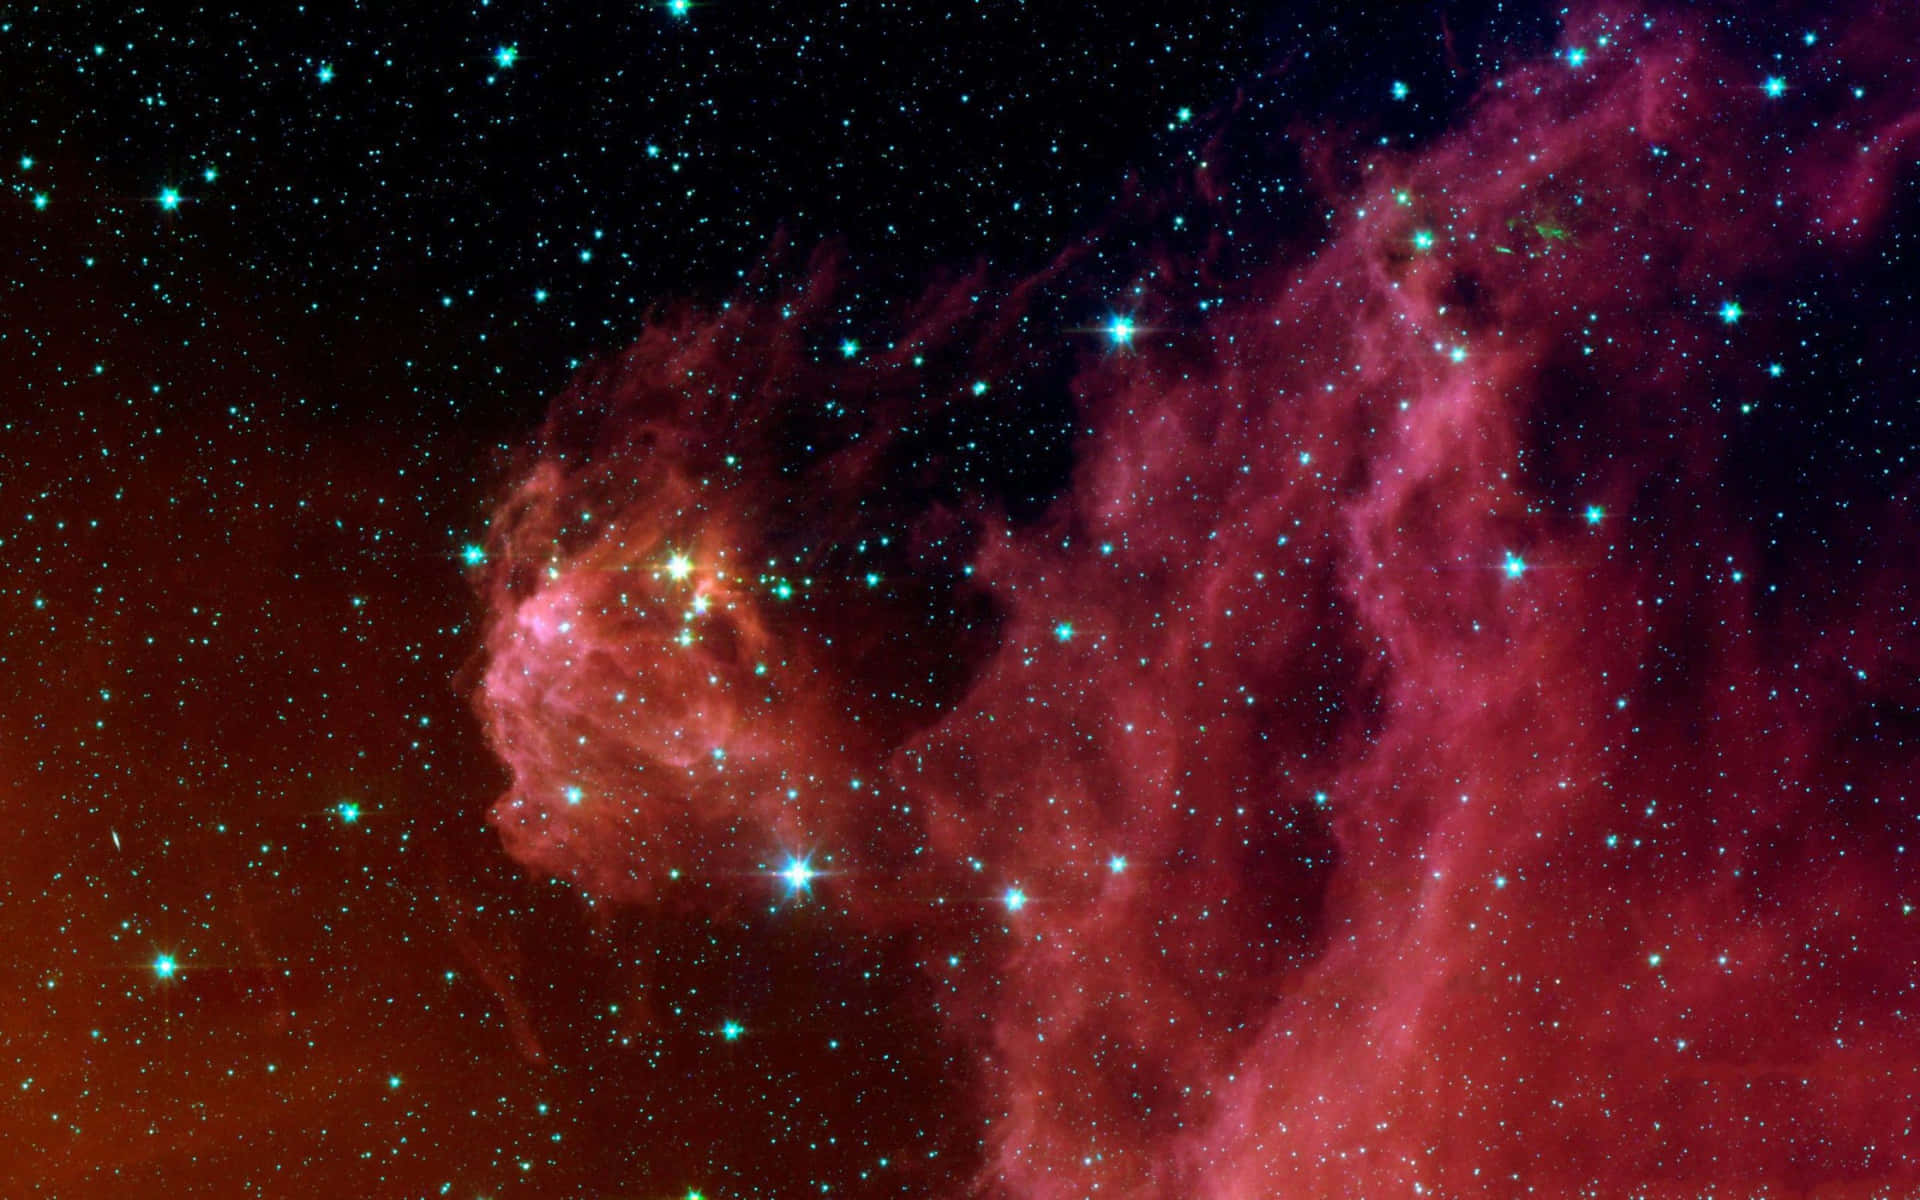 Dark Galaxy - Mesmerizing Cosmos in the Celestial Night Sky Wallpaper